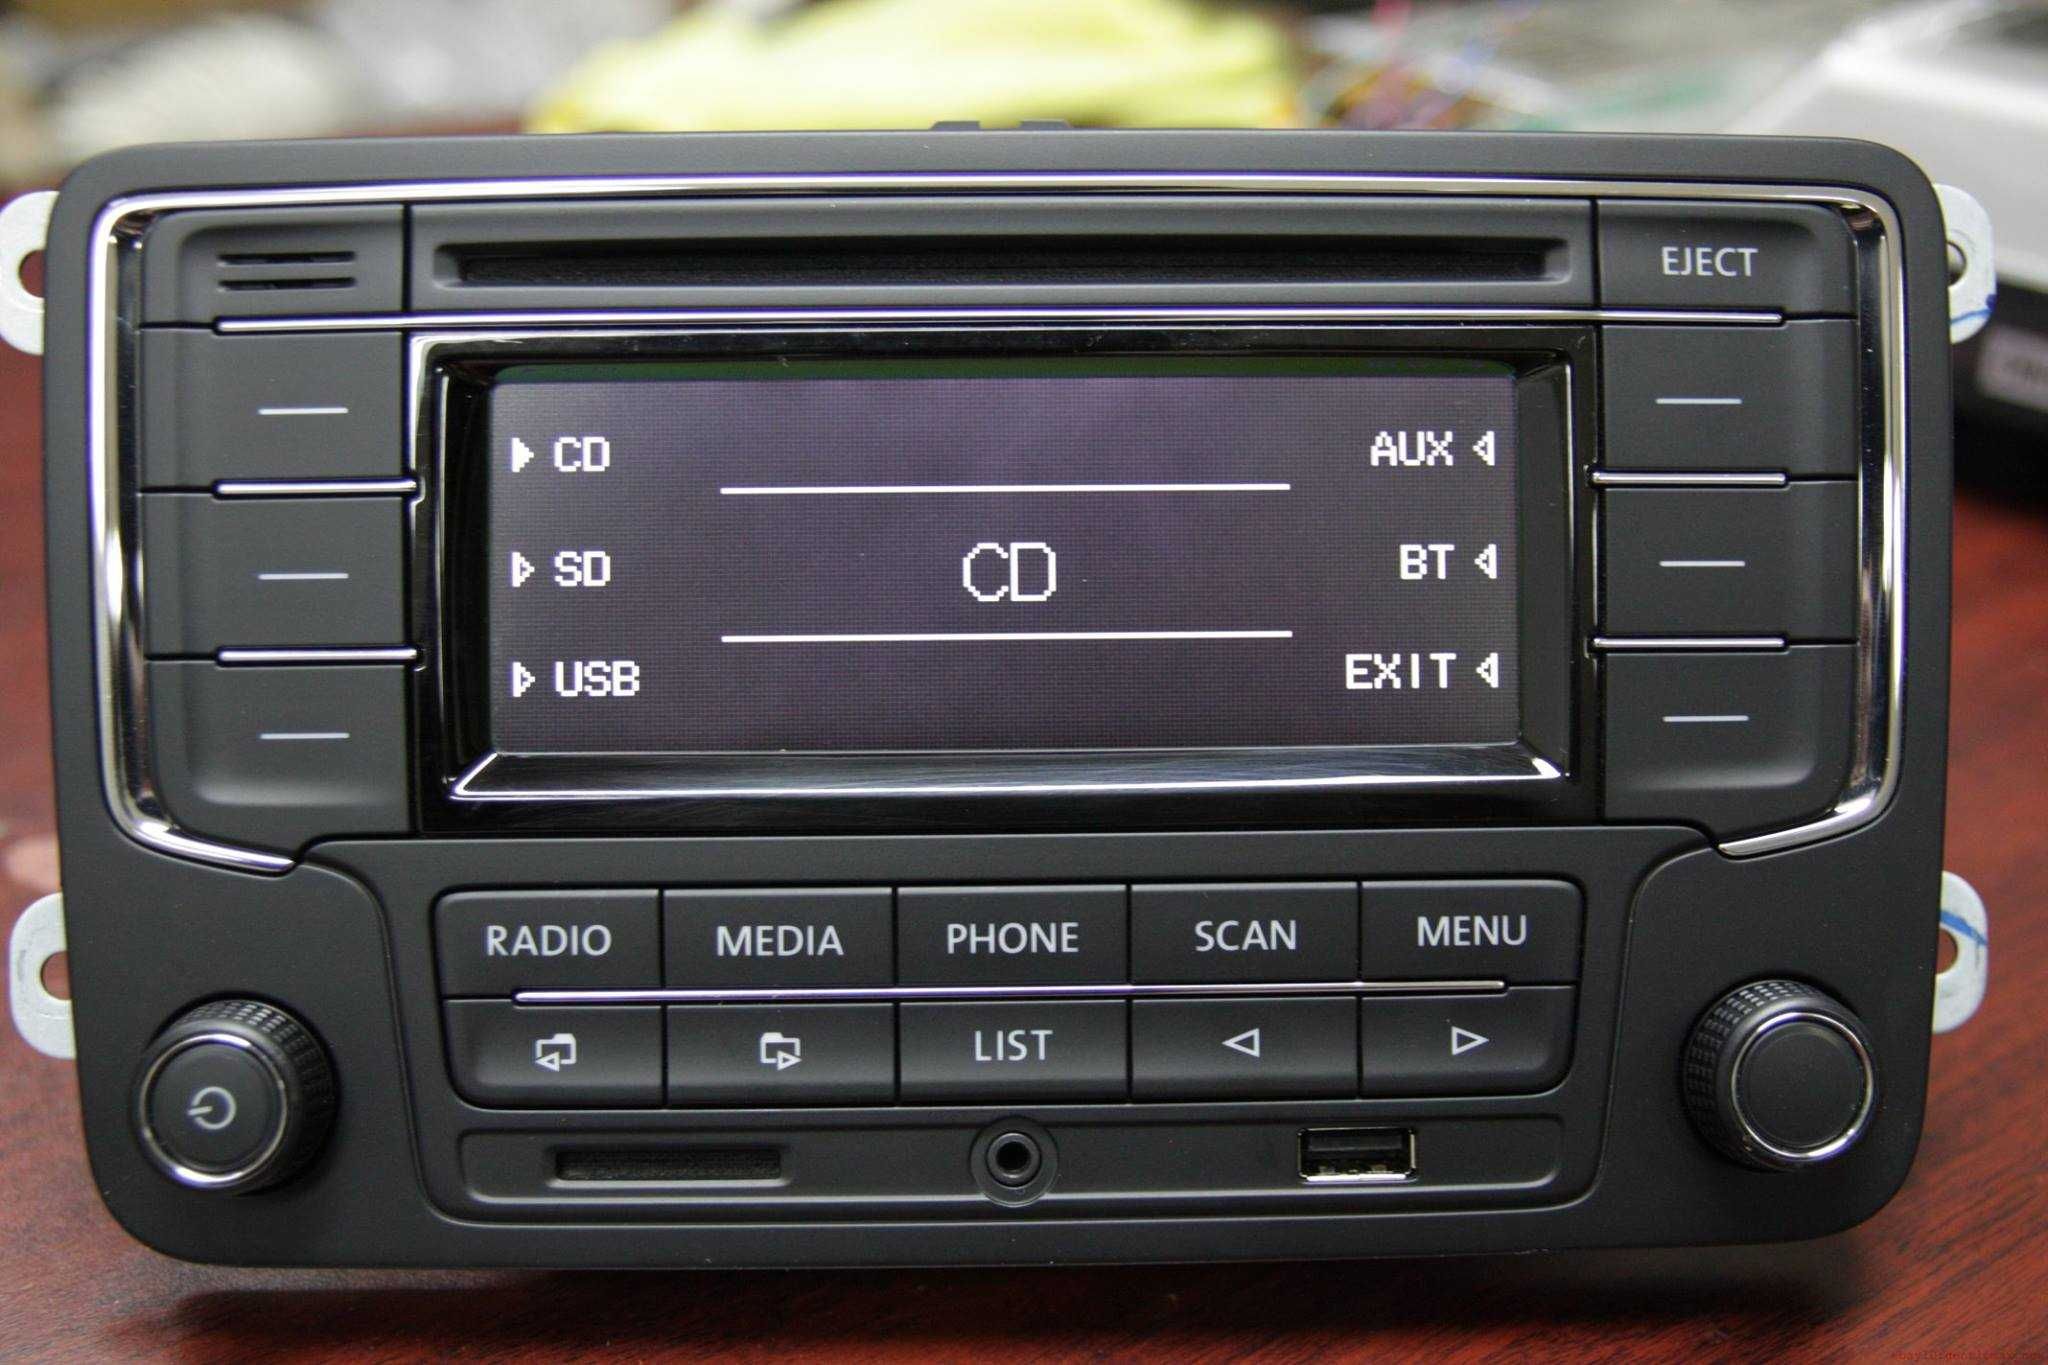 Radio original Volkswagen Bluetooth Passat Golf 5 Touran USB VW RCN210